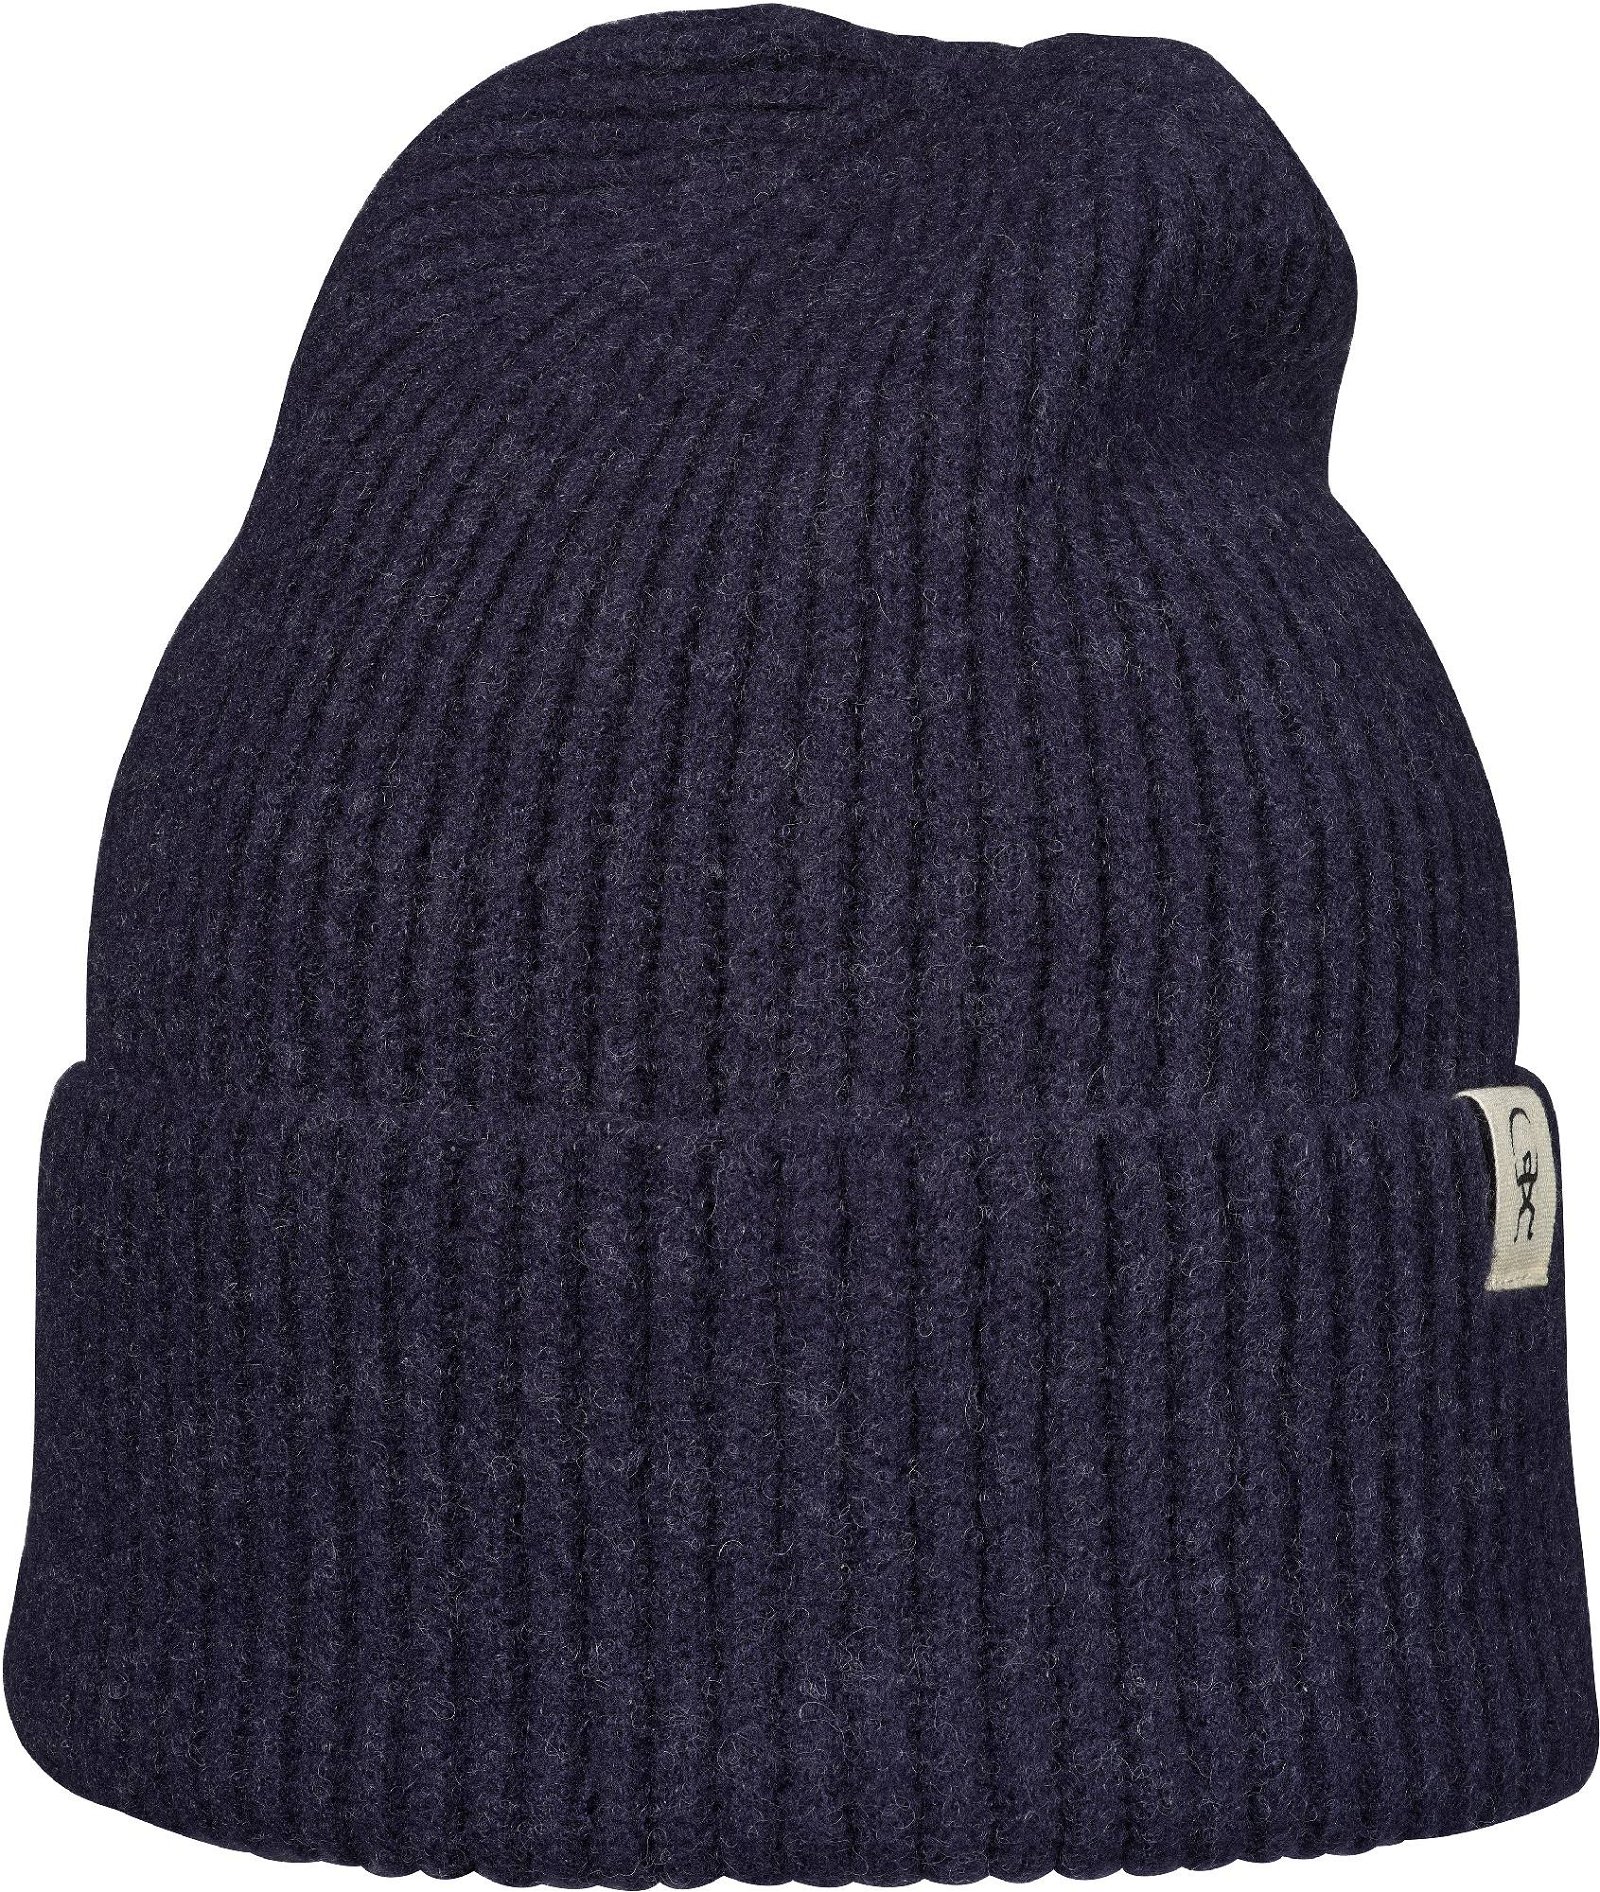 Isbjörn Minty Knitted Cap